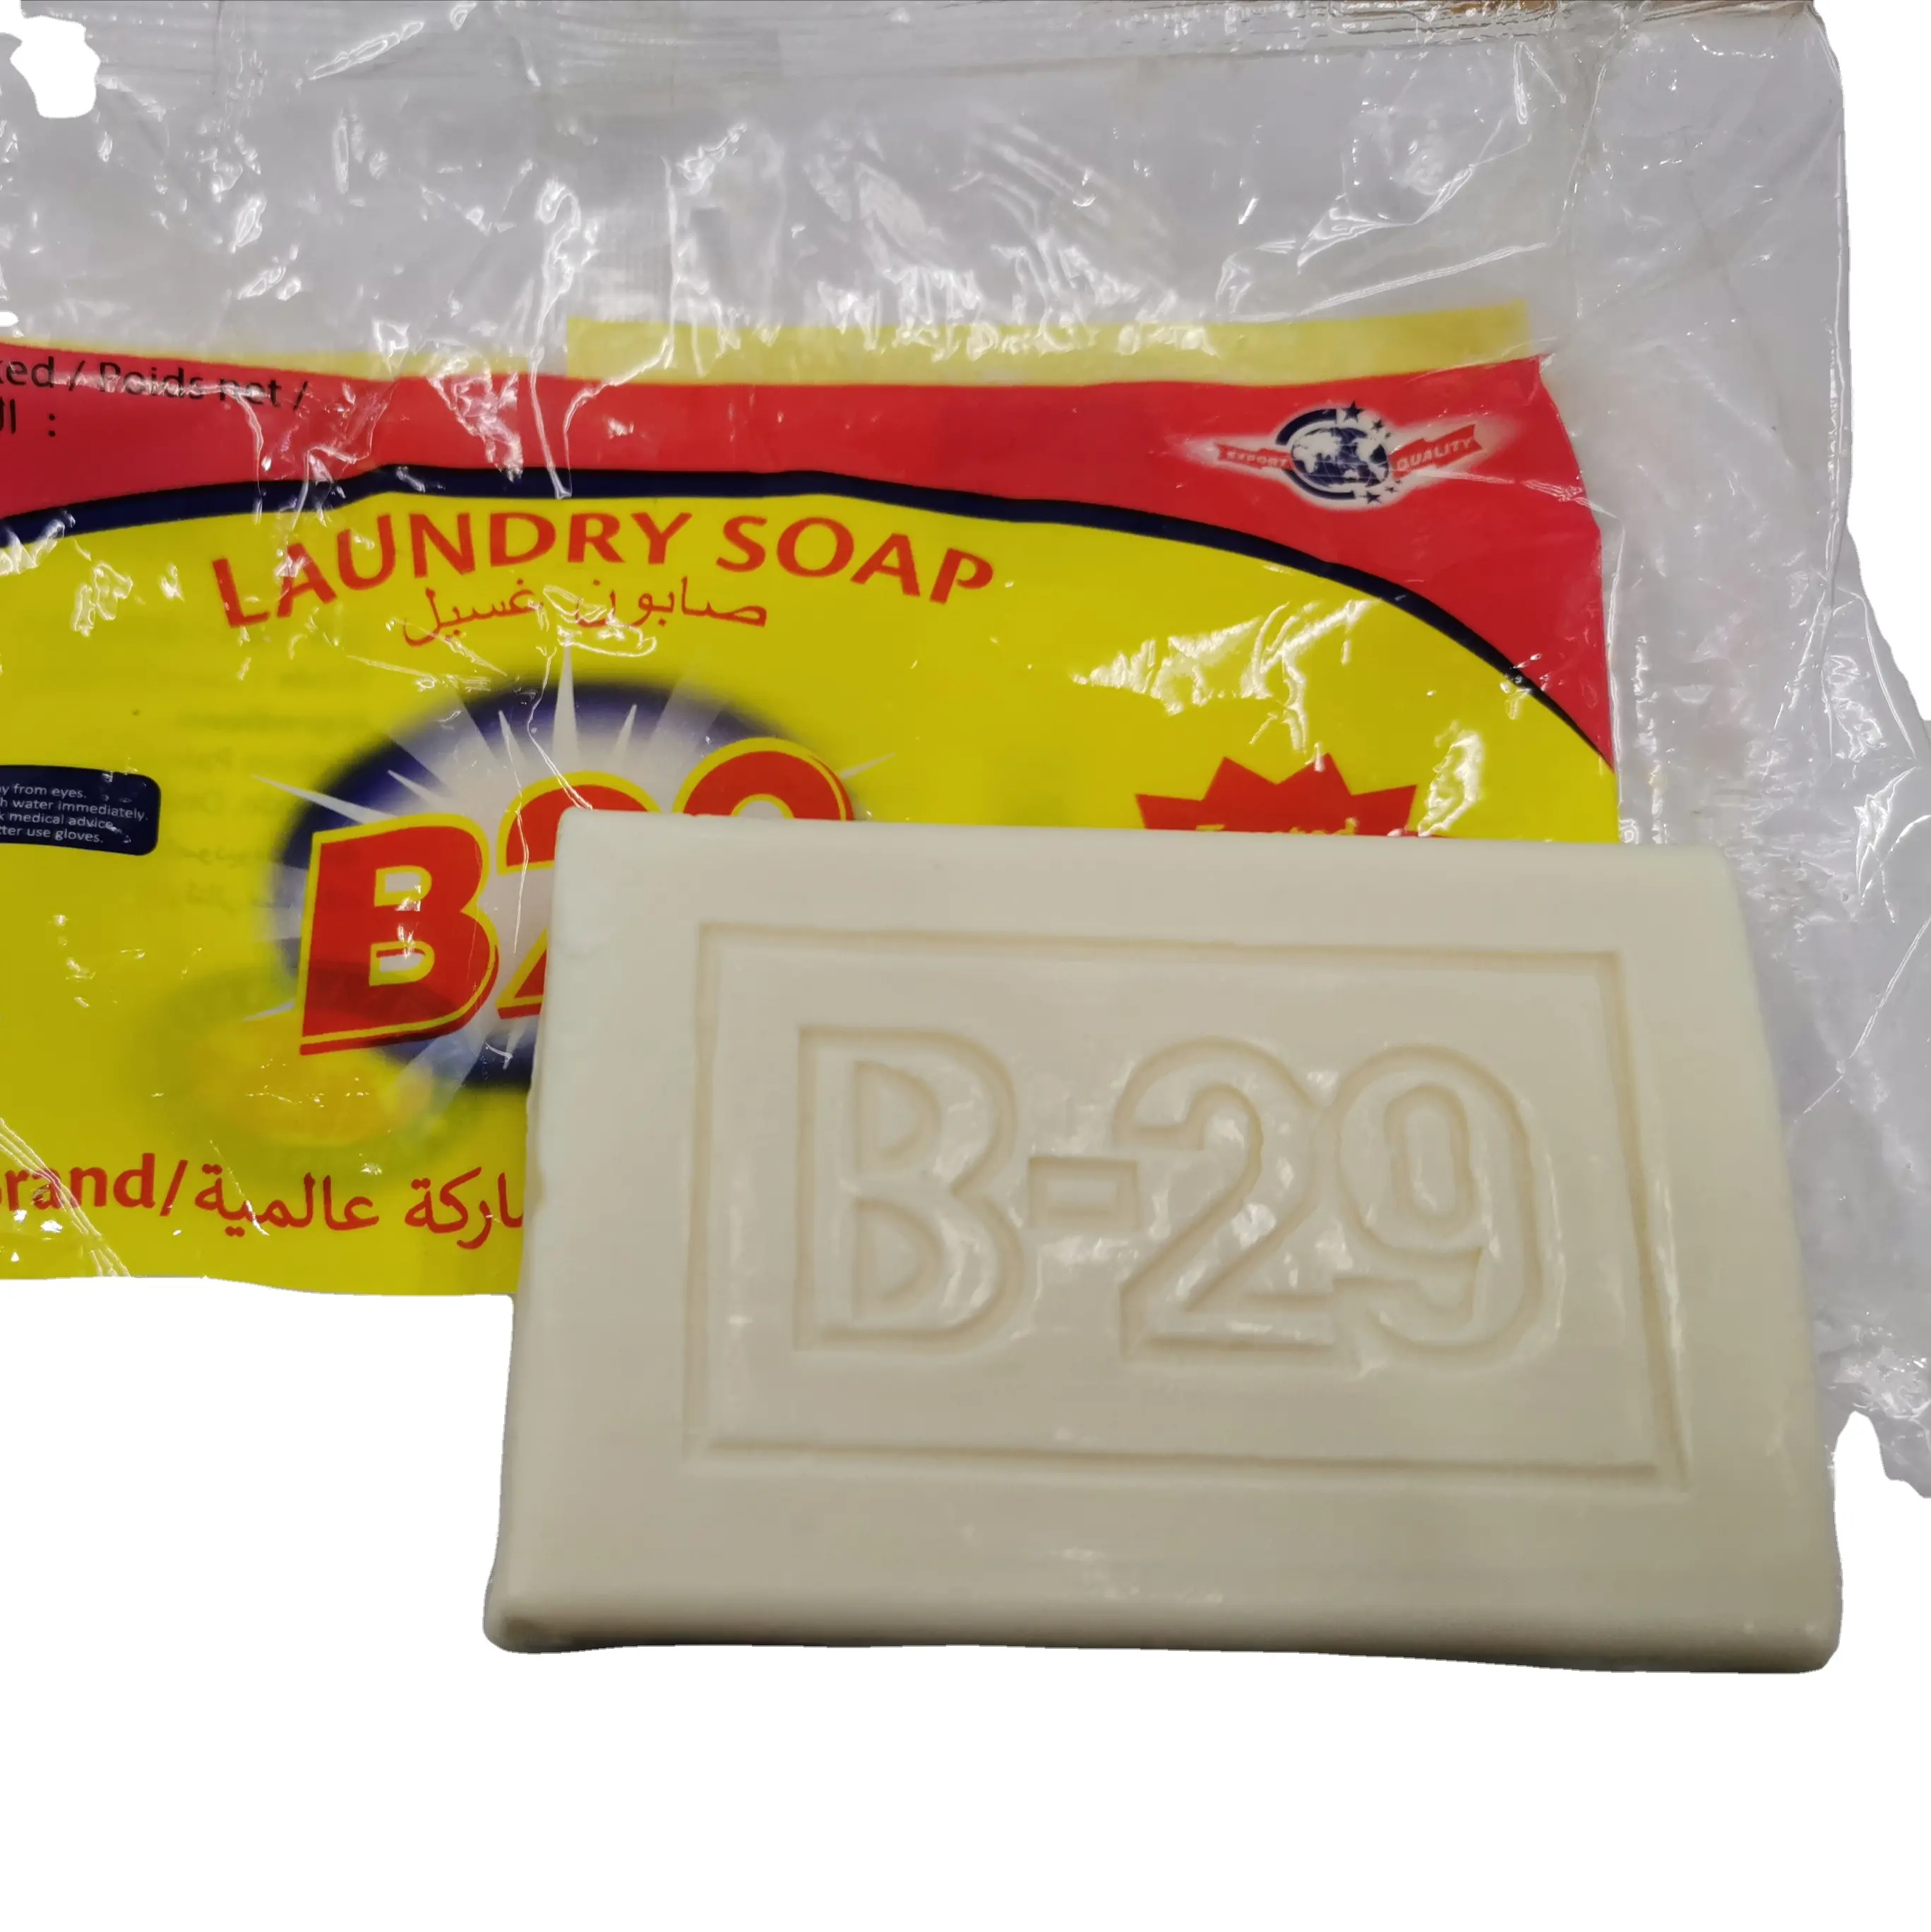 Materia prima de jabón para lavar ropa b29